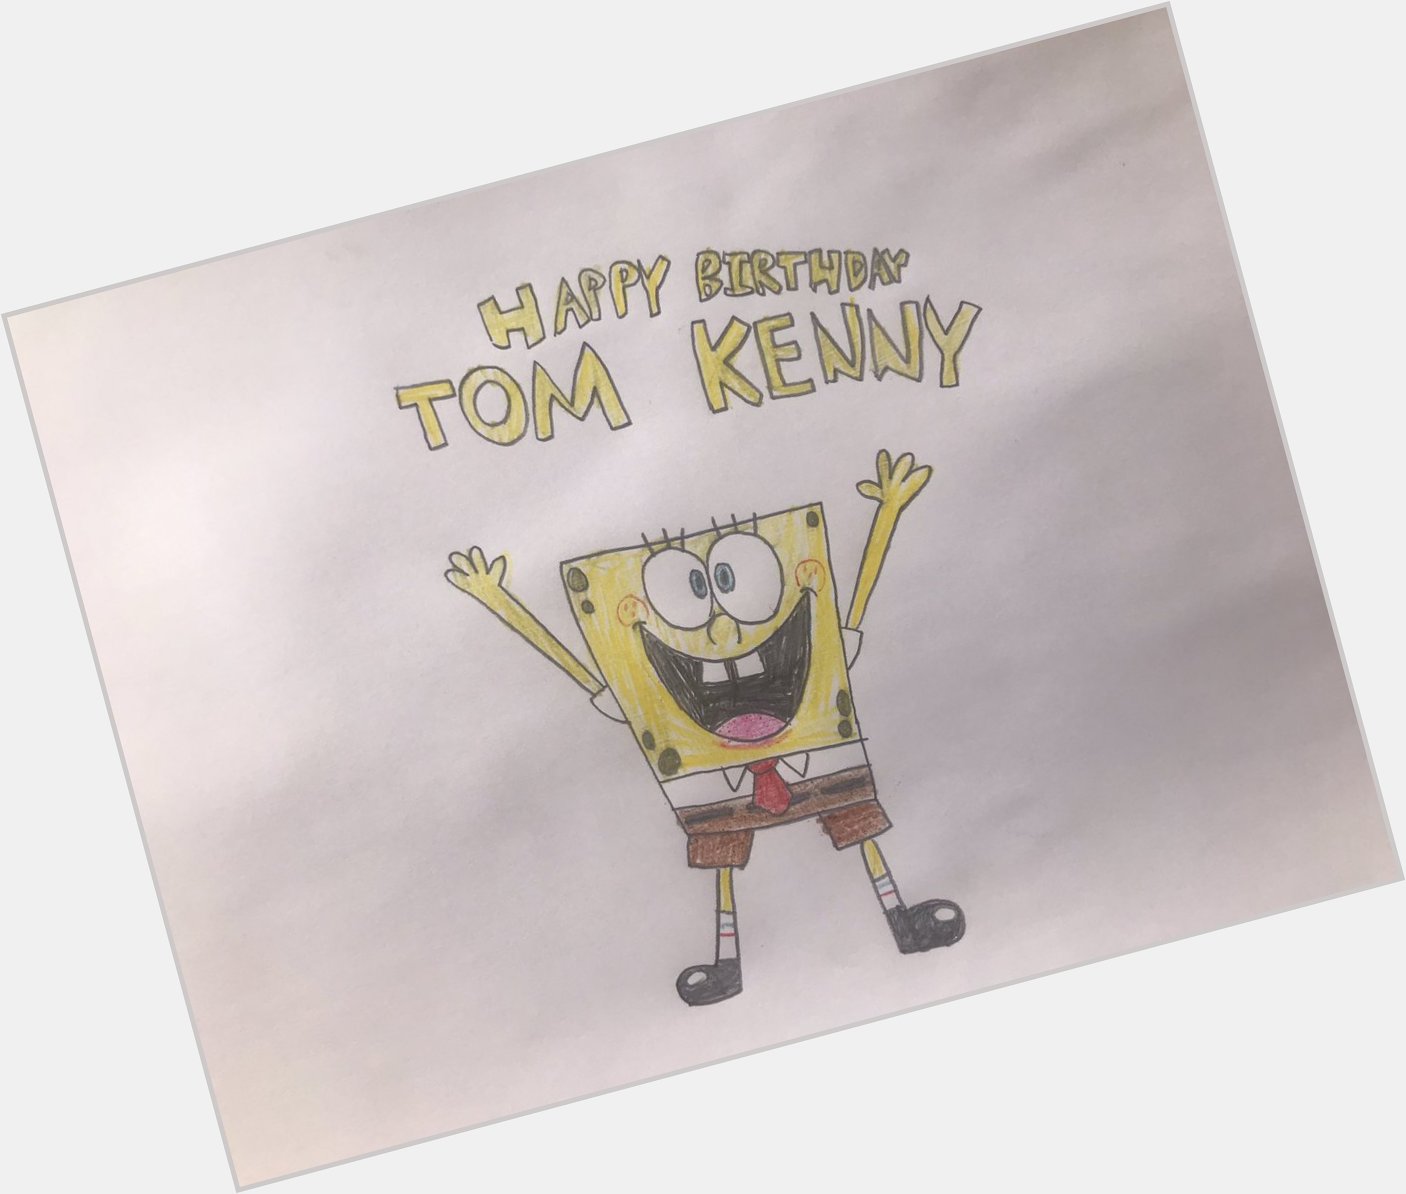 Happy birthday to Tom Kenny, the voice of my favourite Nickelodeon character, SpongeBob SquarePants! 